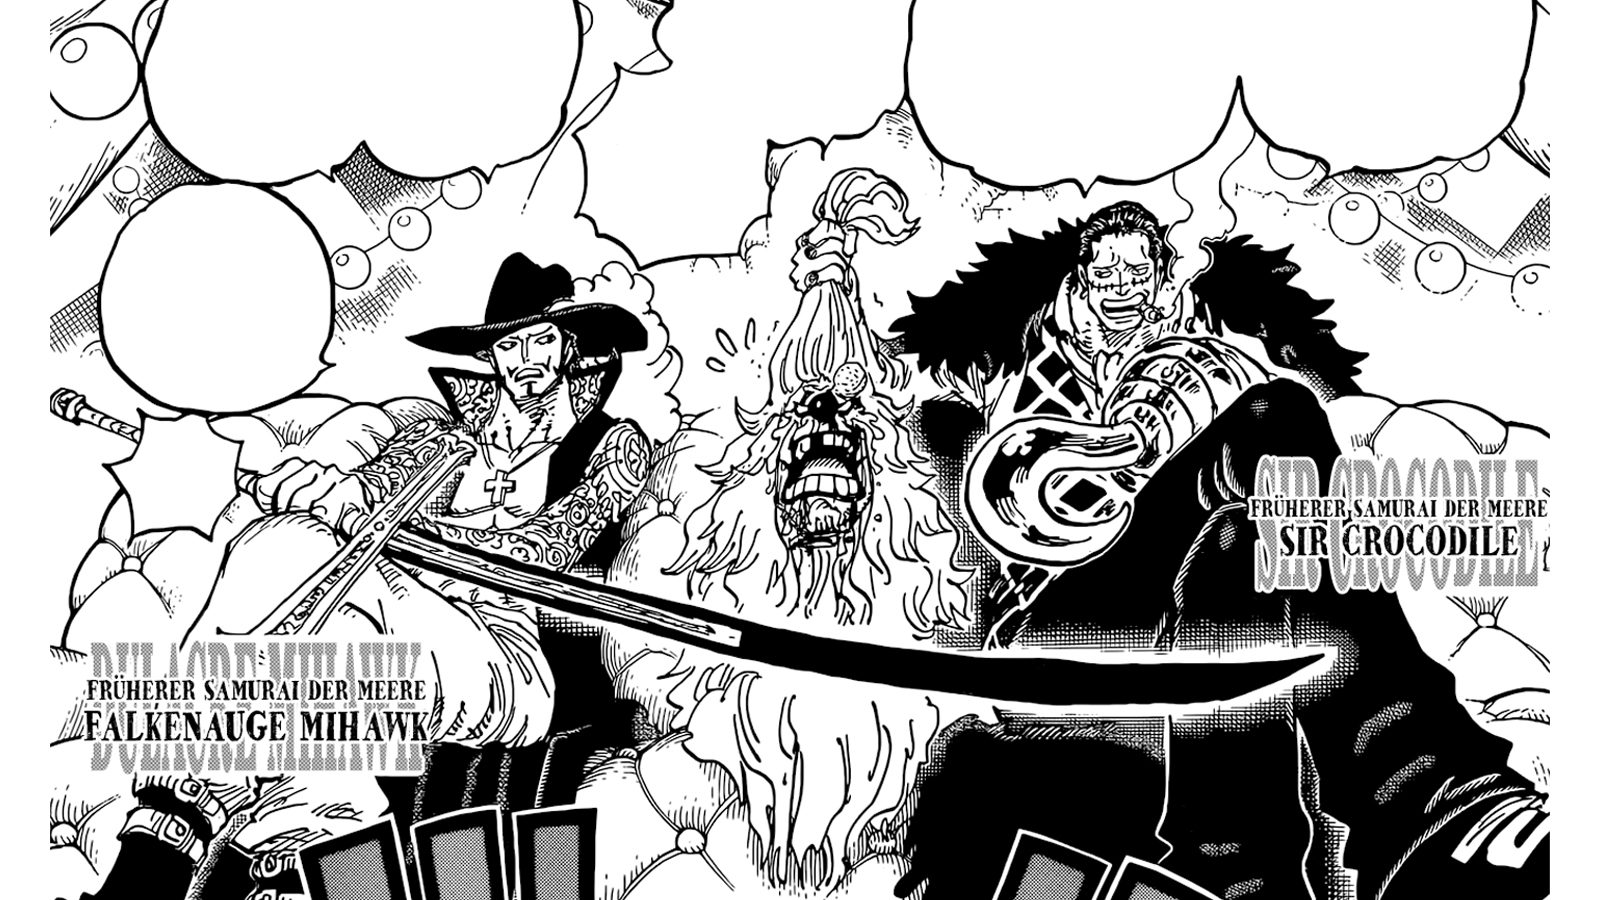 One Piece, Manga Chapter 1058, Cross Guild (Mihawk, Buggy, Crocodile)